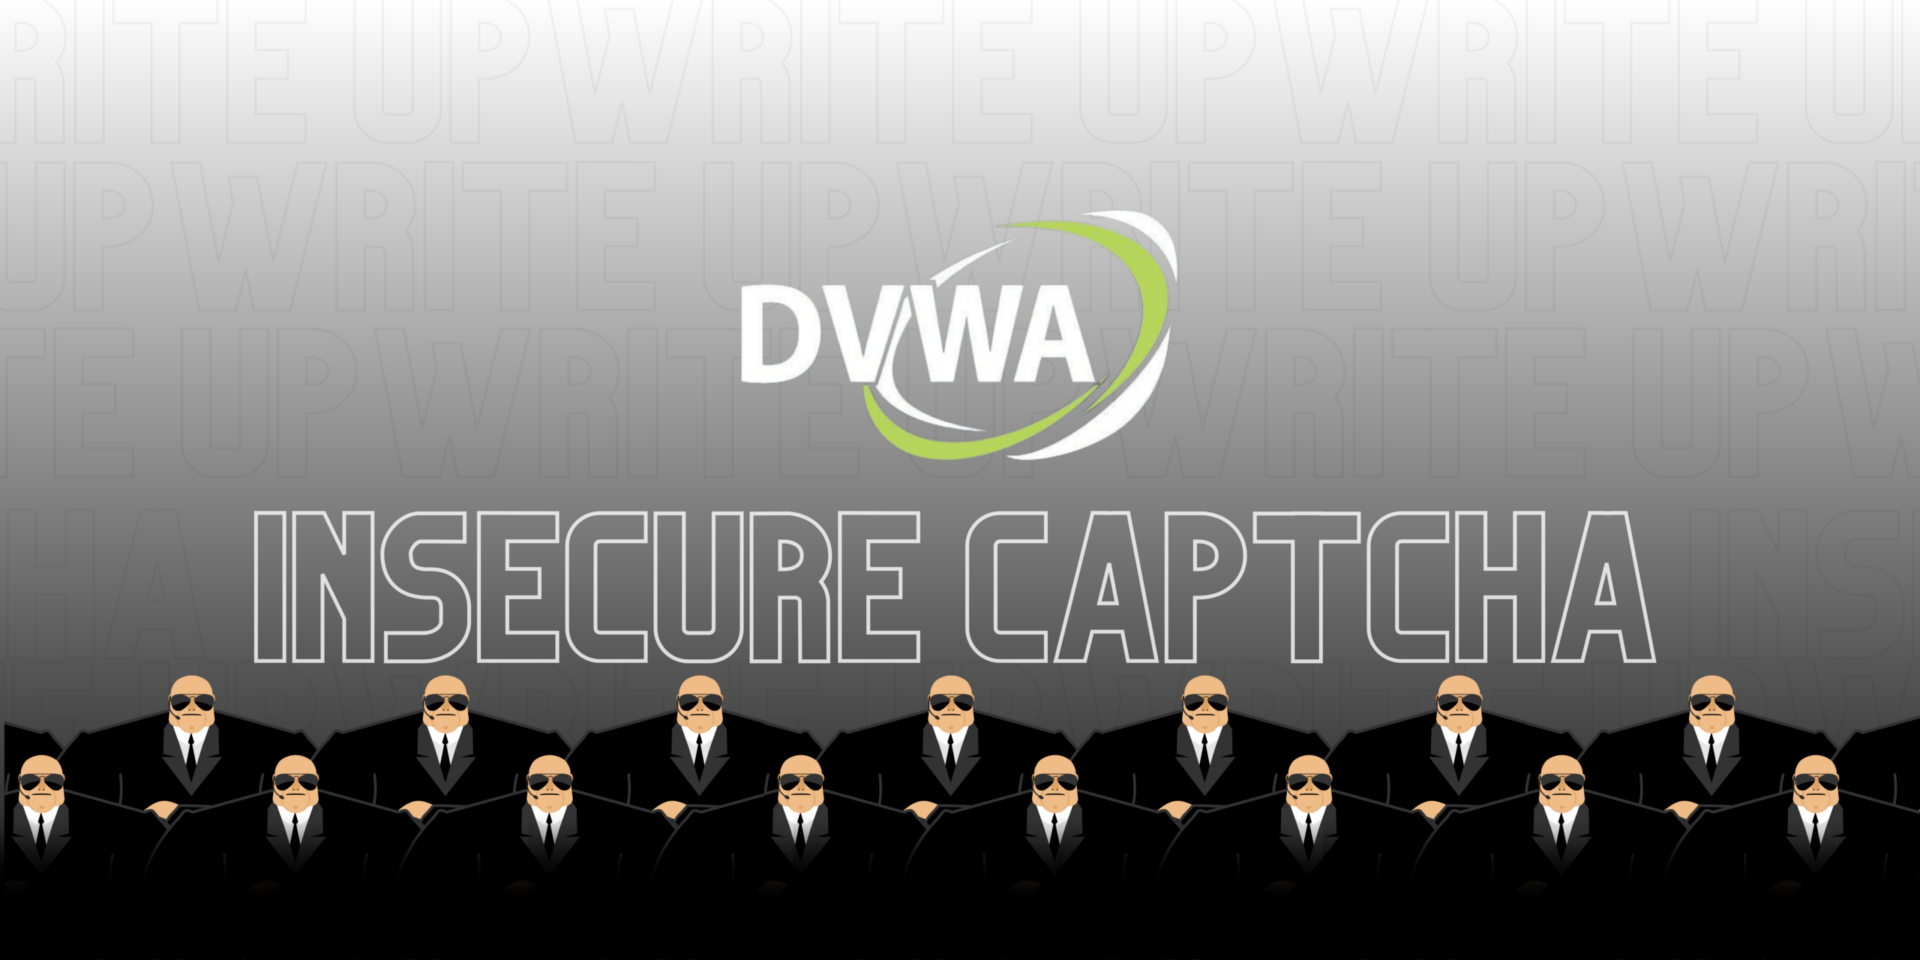 Insecure CAPTCHA DVWA (Low)